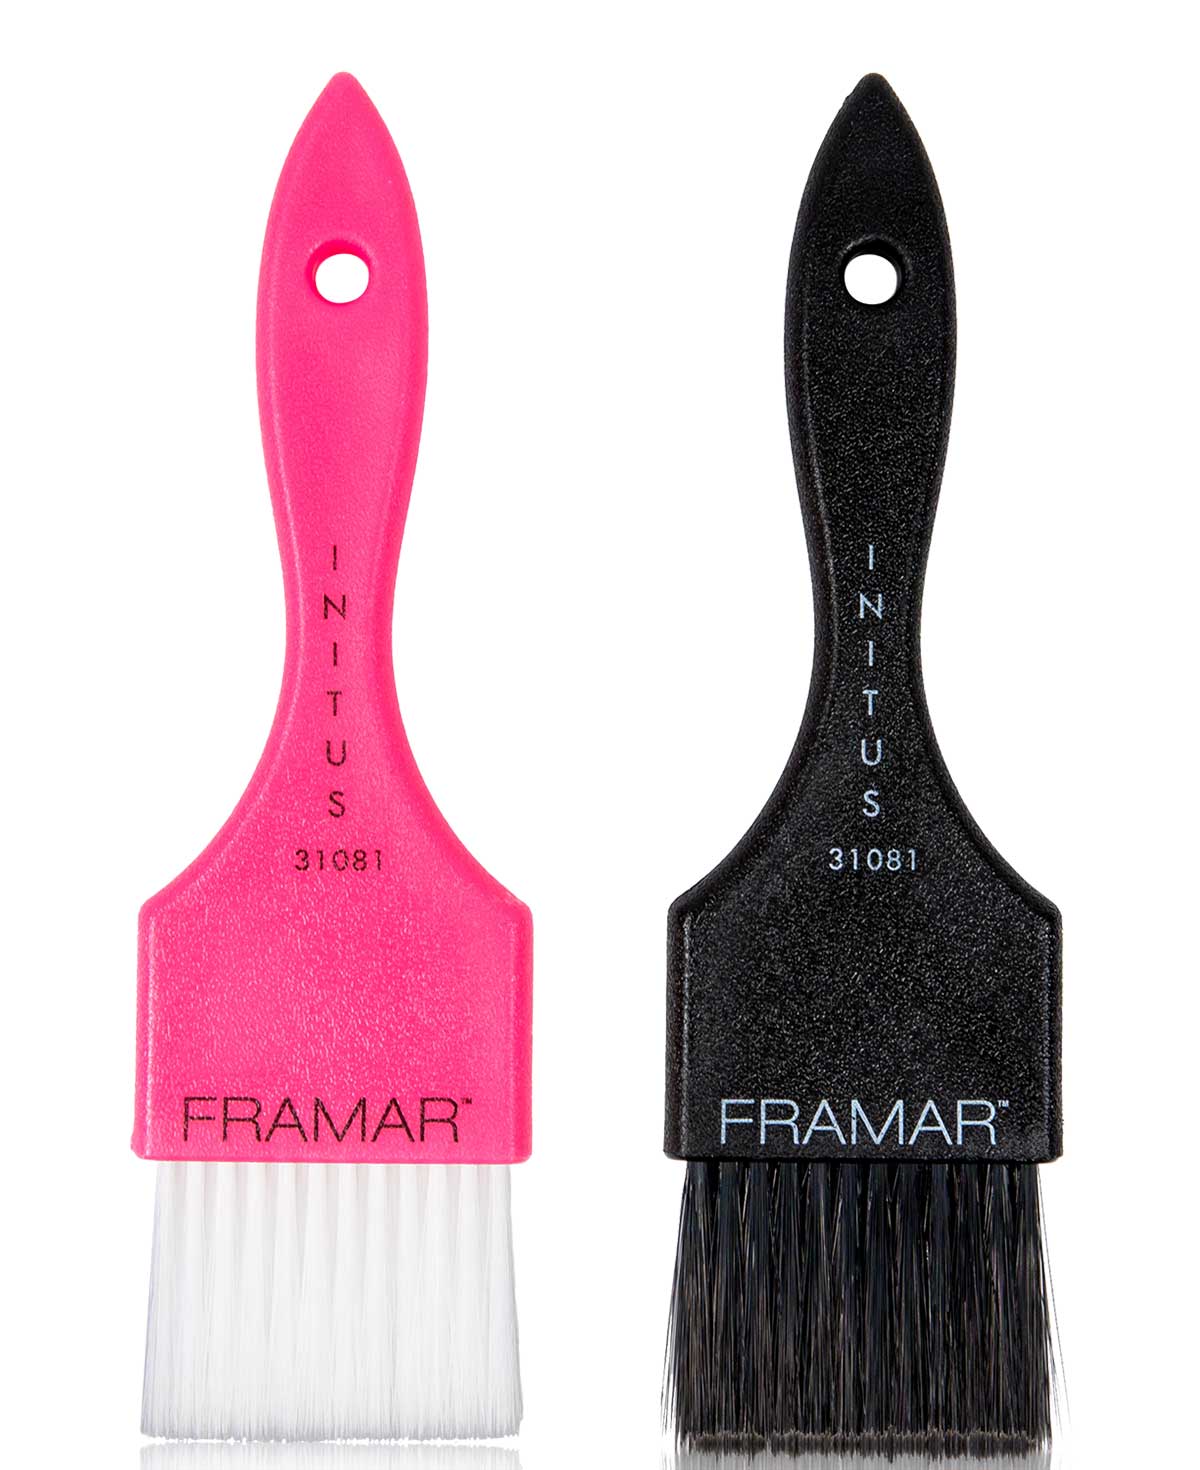 Framar Power Painter Hair Coloring Brush - 2 Pack